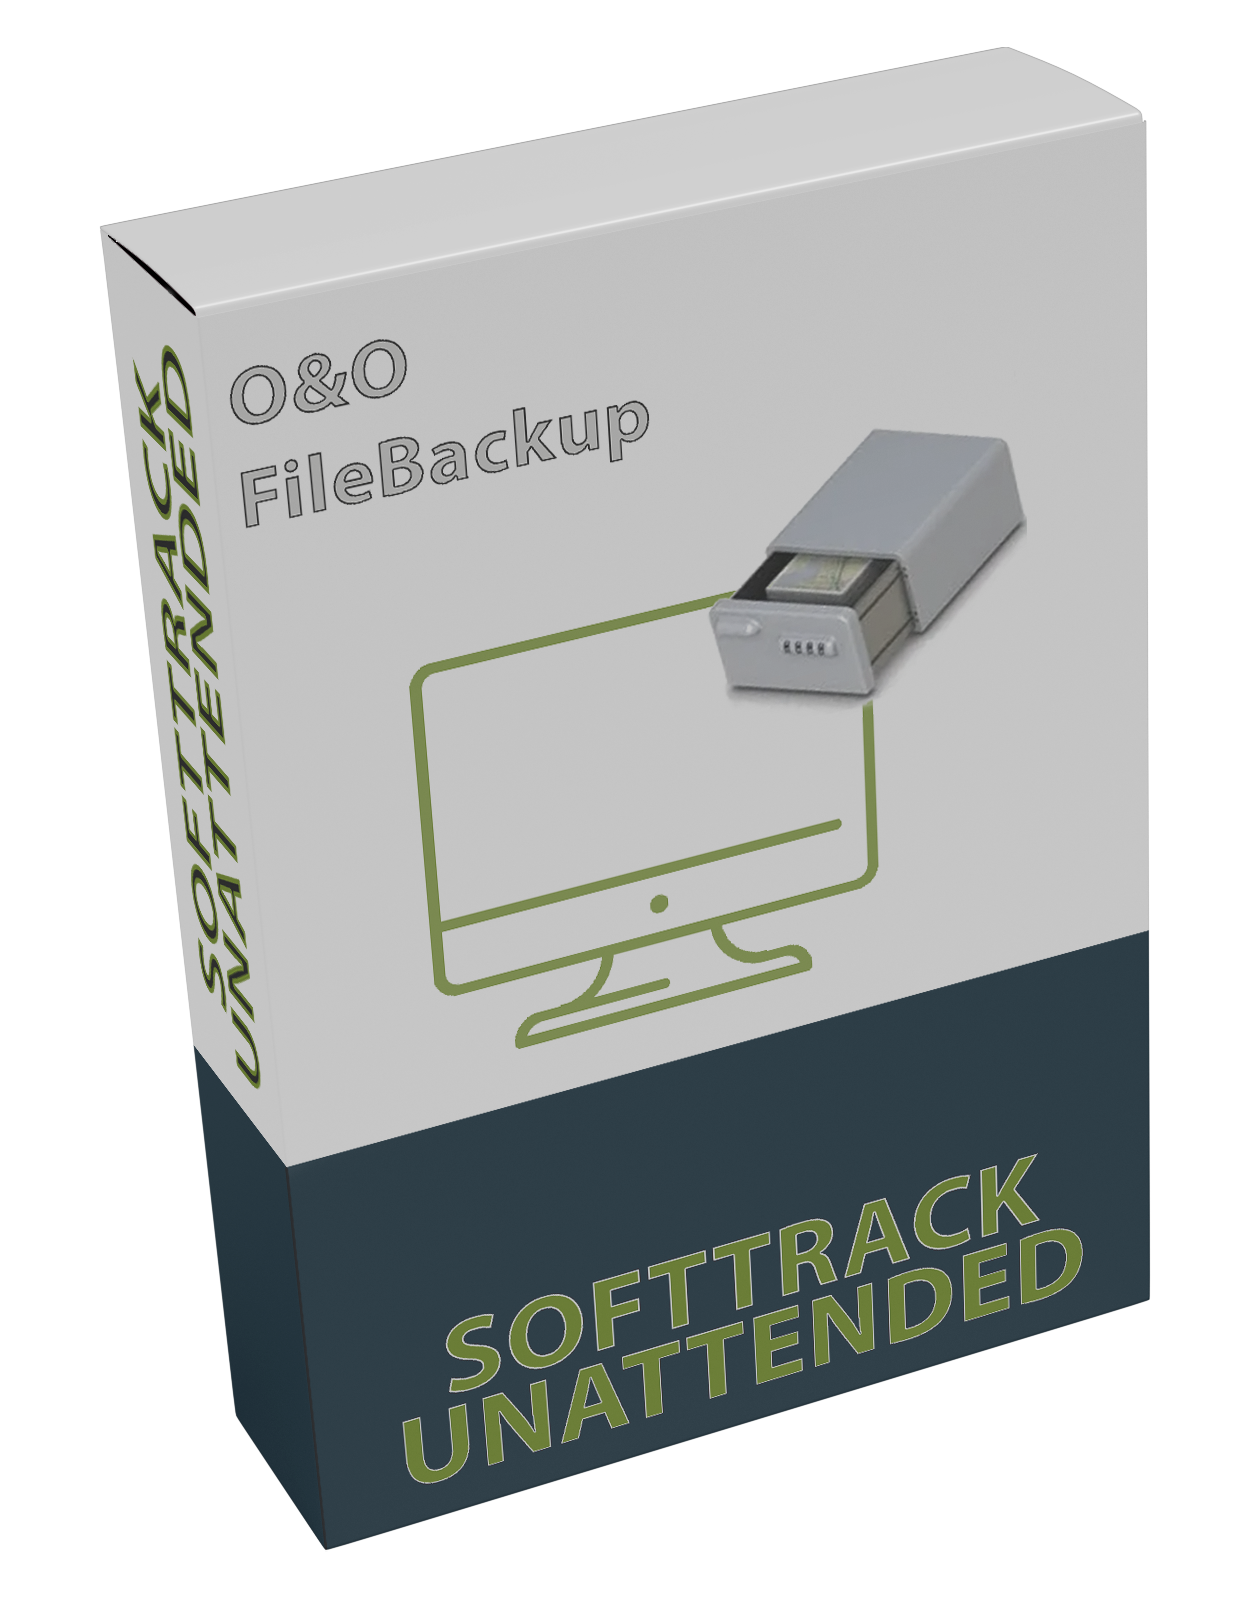 O&O FileBackup 2.1.1375 UNATTENDED